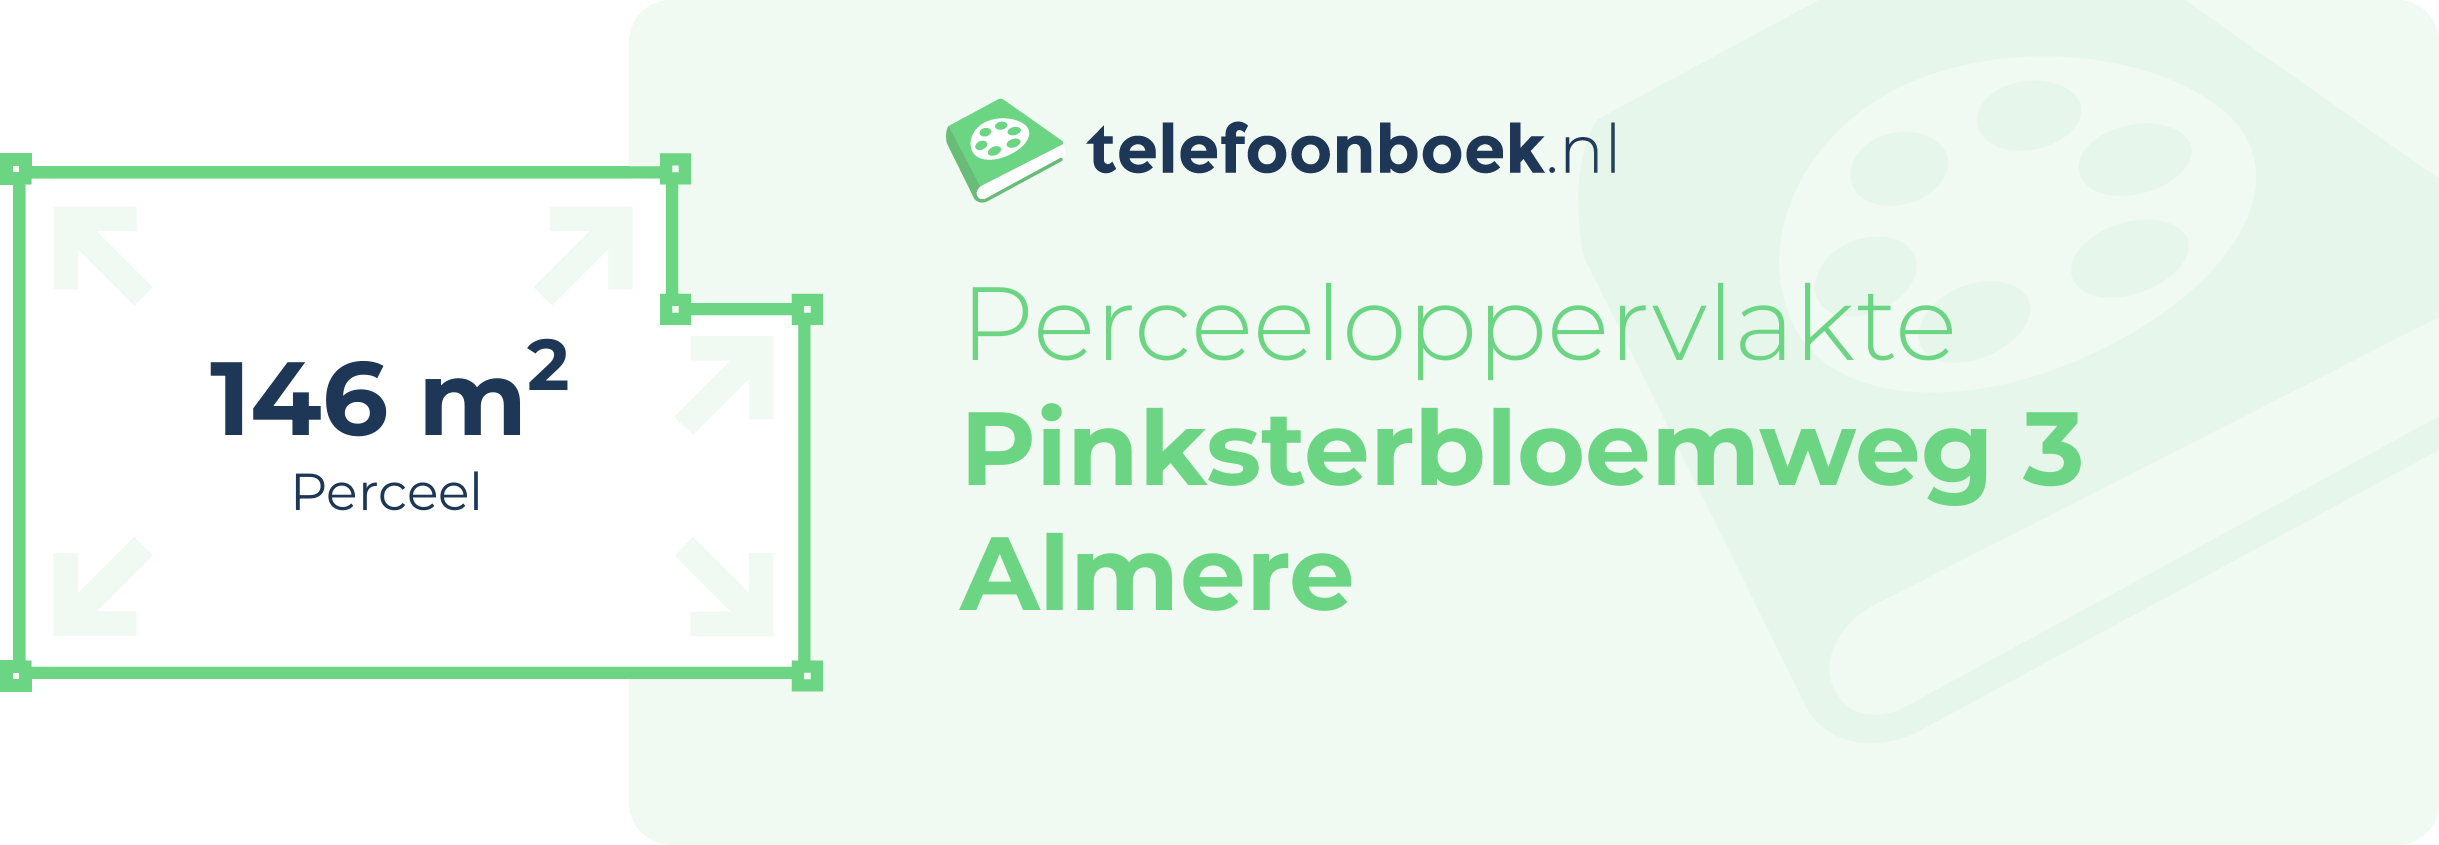 Perceeloppervlakte Pinksterbloemweg 3 Almere